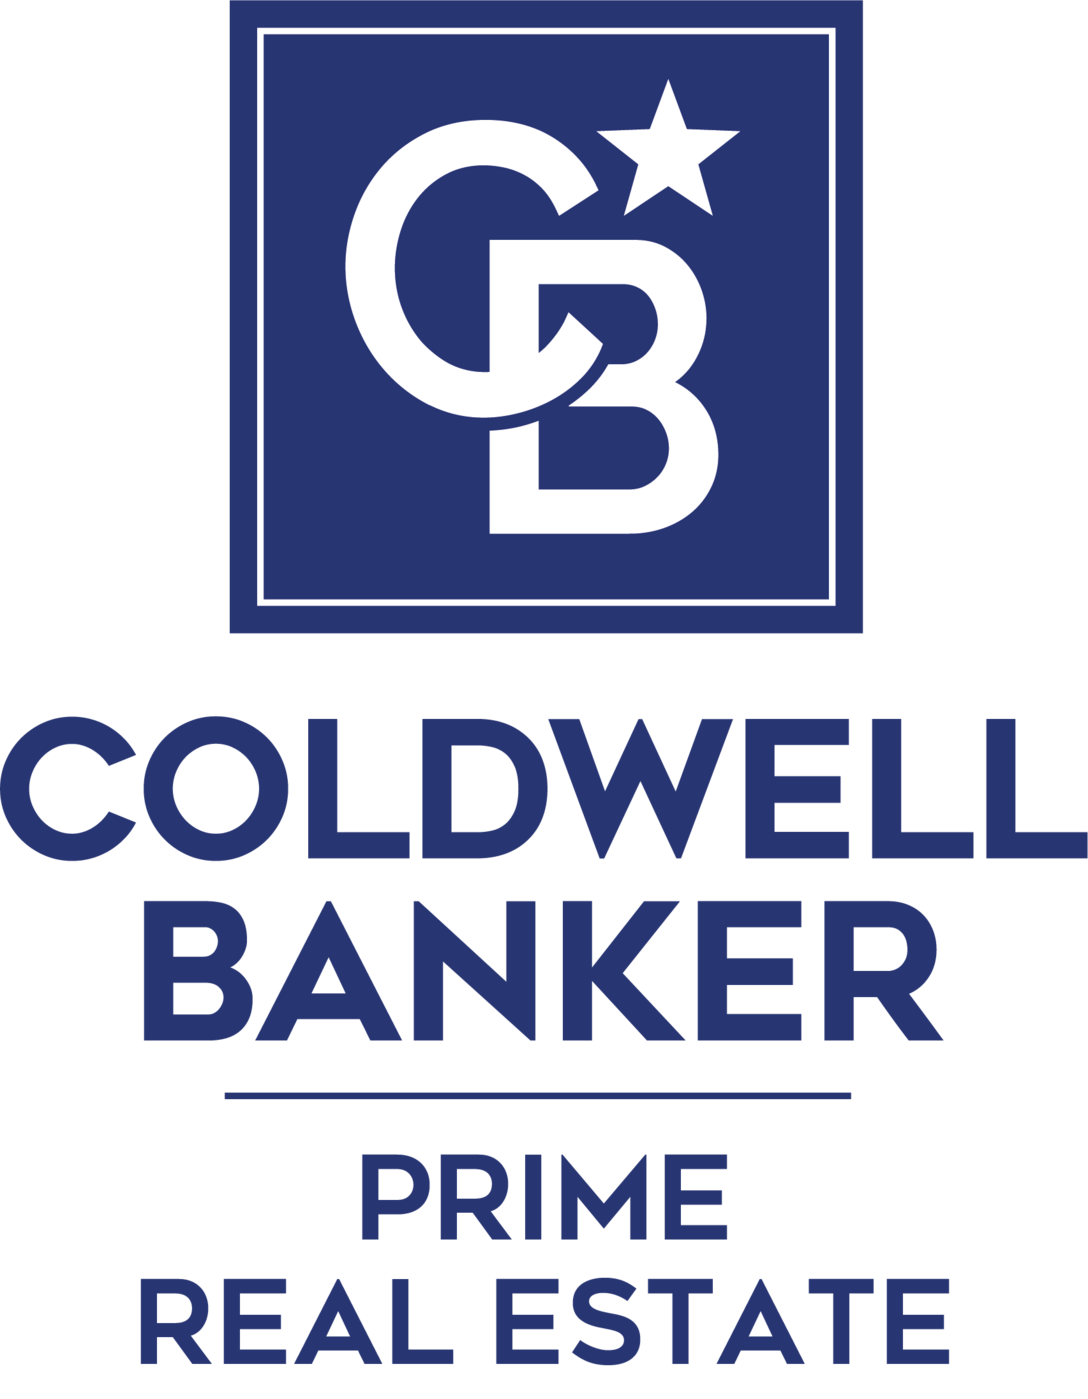 Coldwell Banker Prime Real Estate